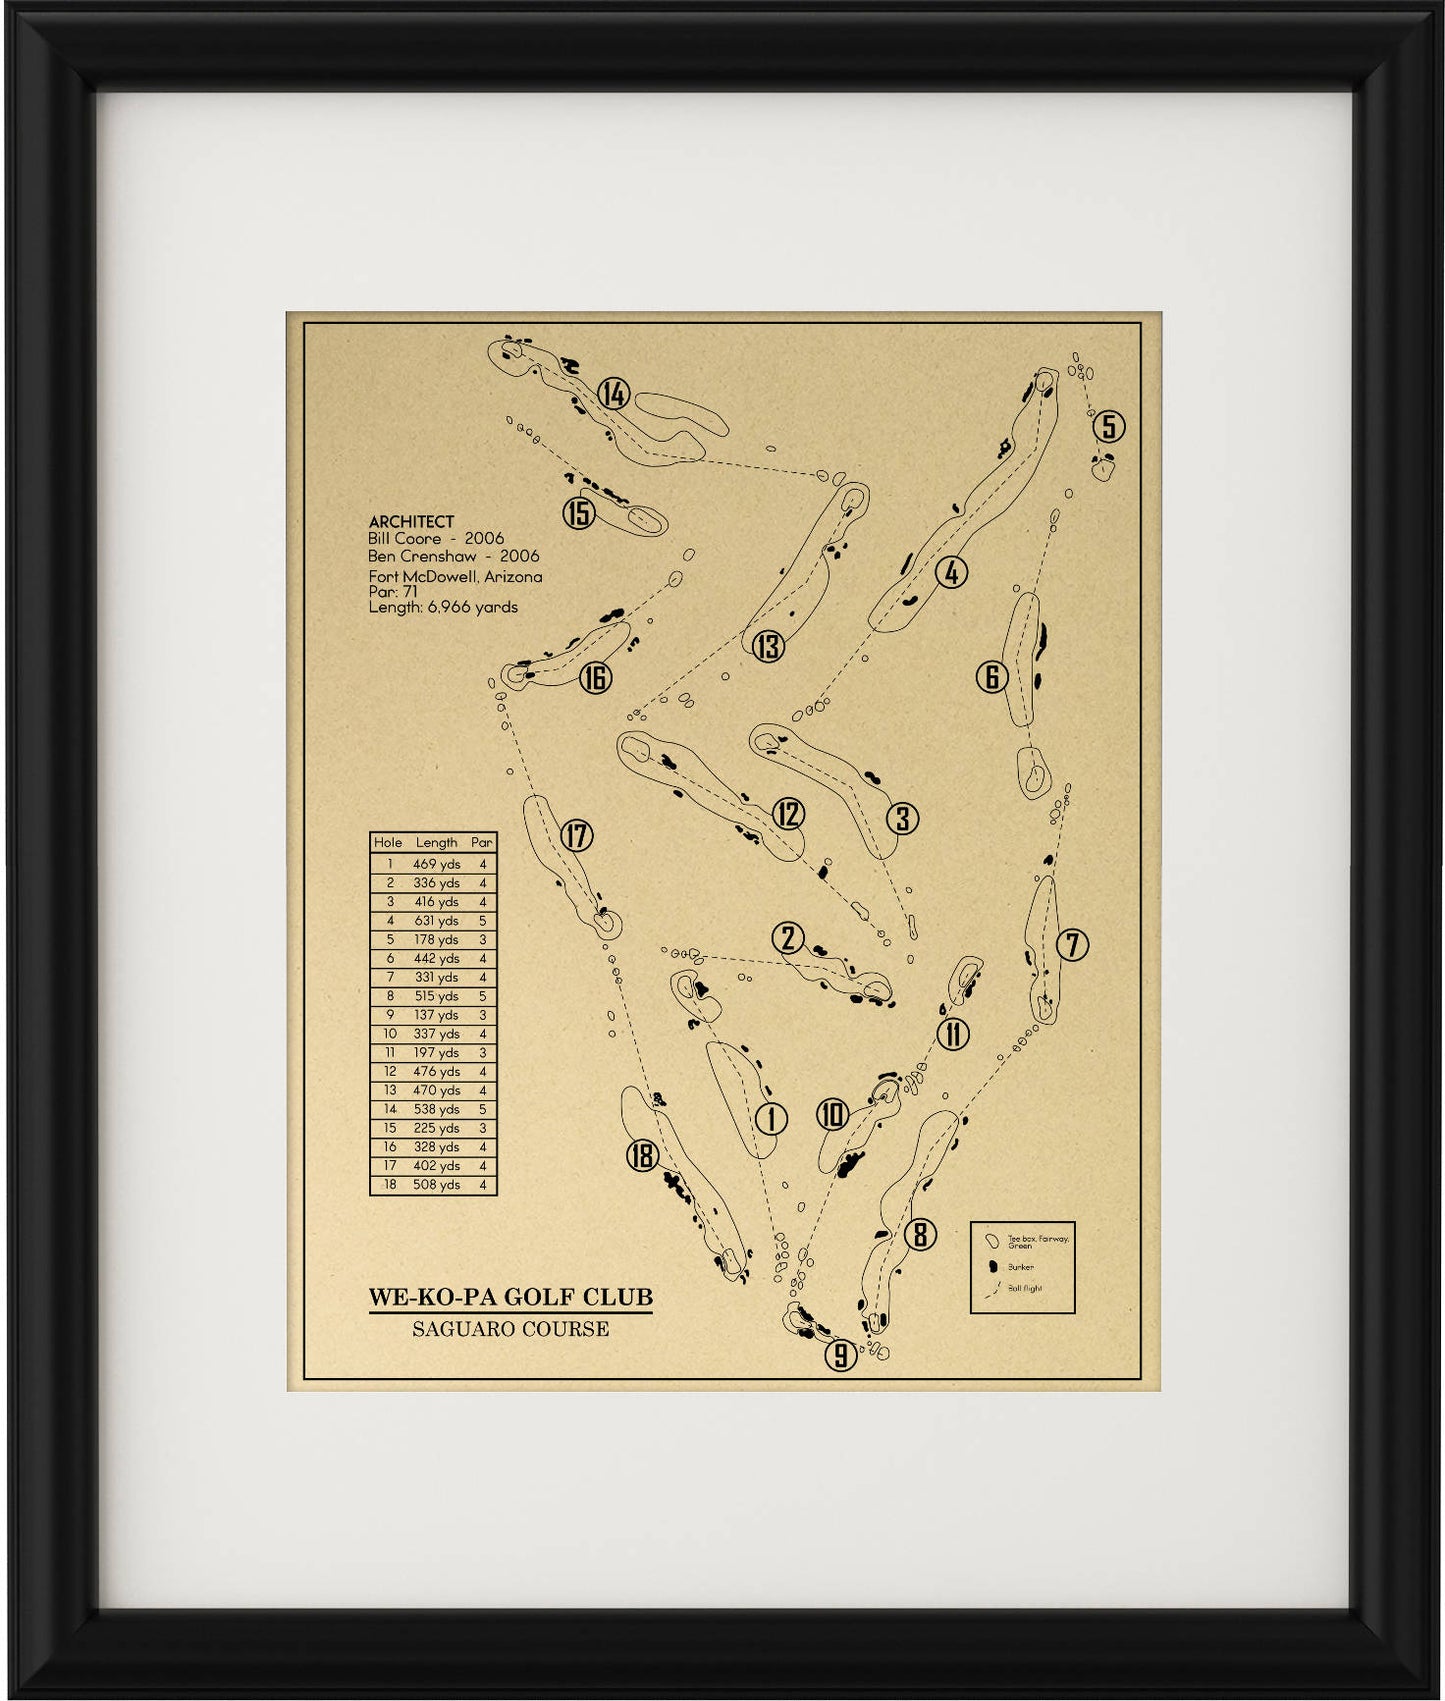 We-Ko-Pa Golf Club - Saguaro Course Outline (Print)